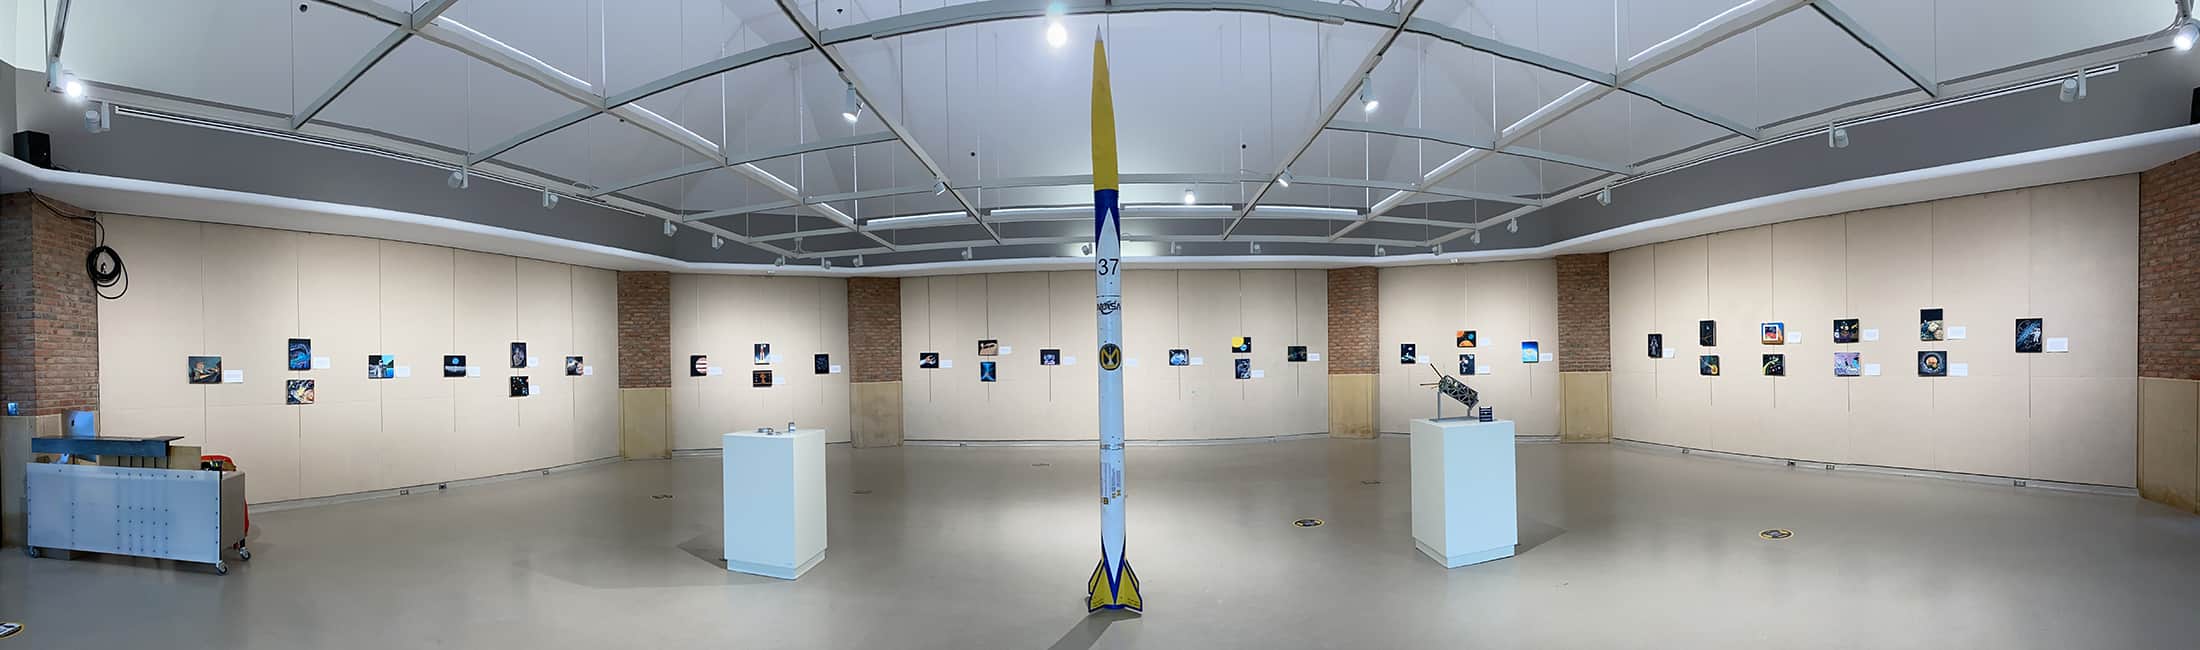 Space art gallery